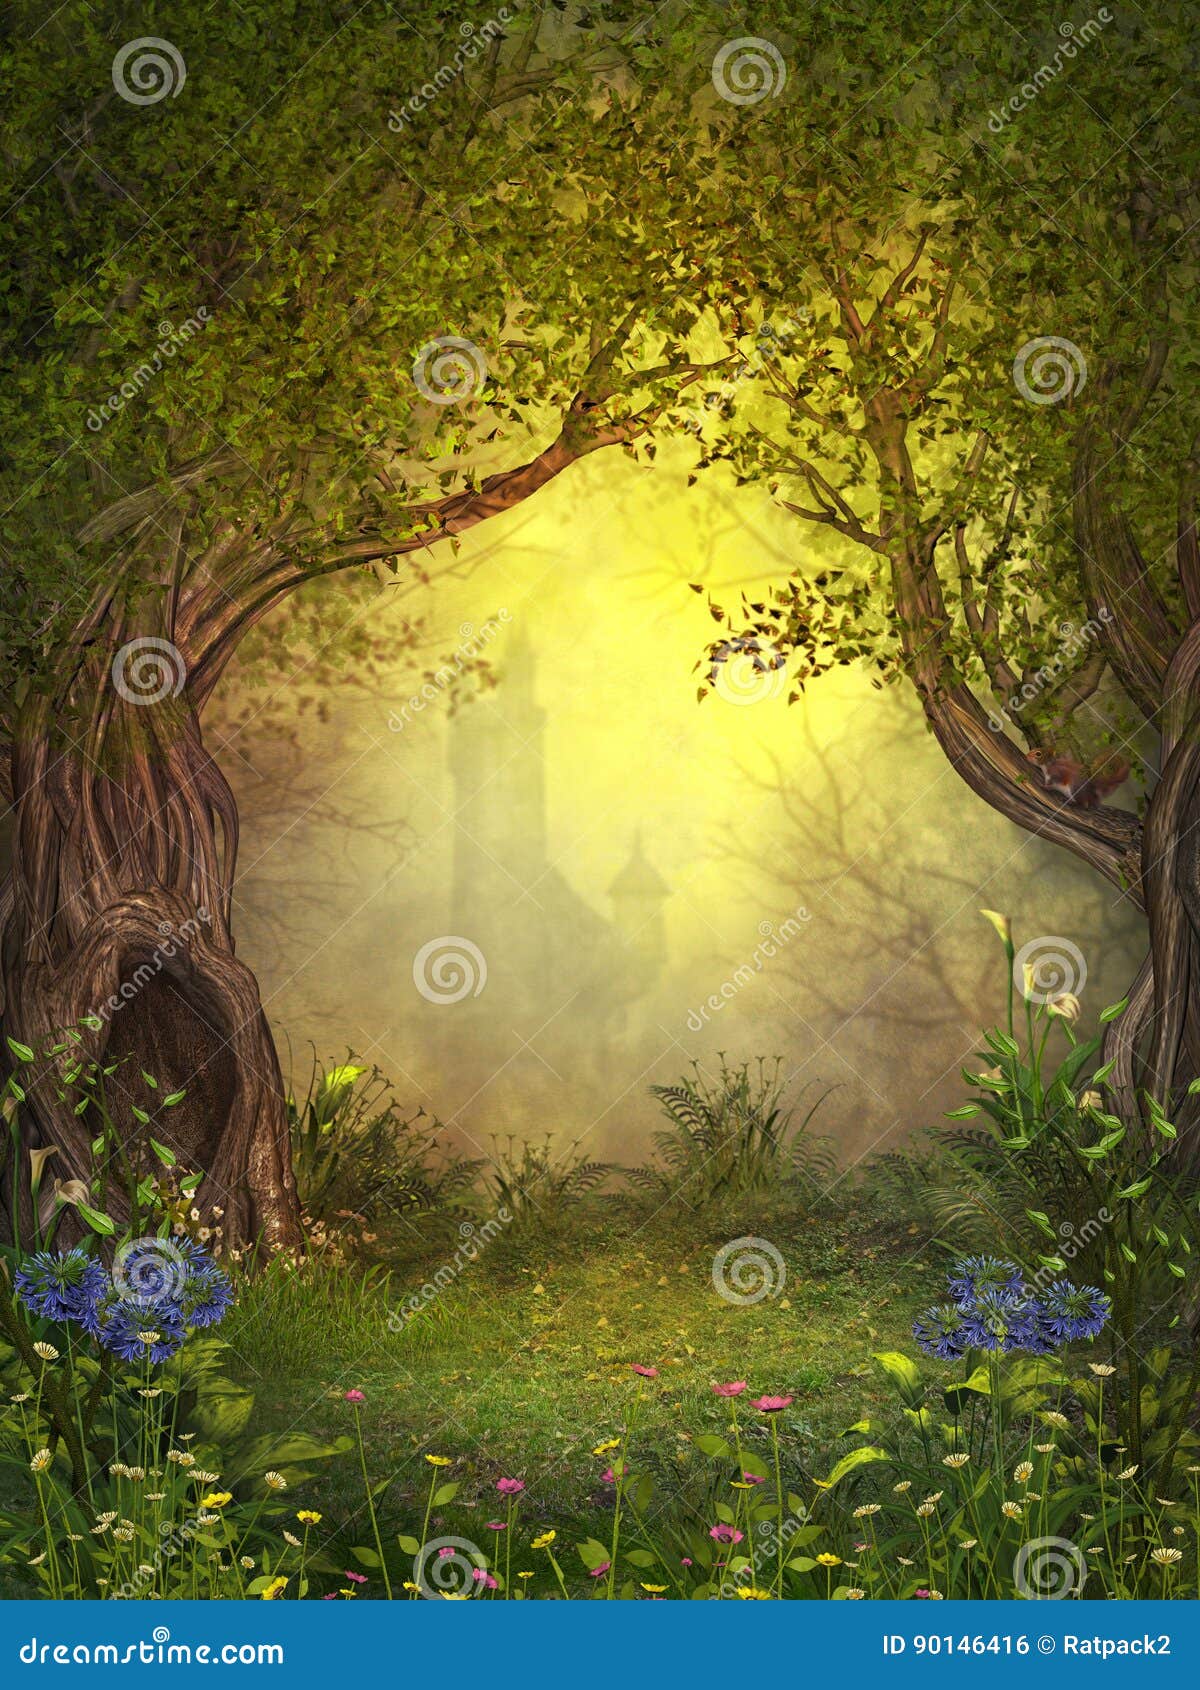 magical fairy woods